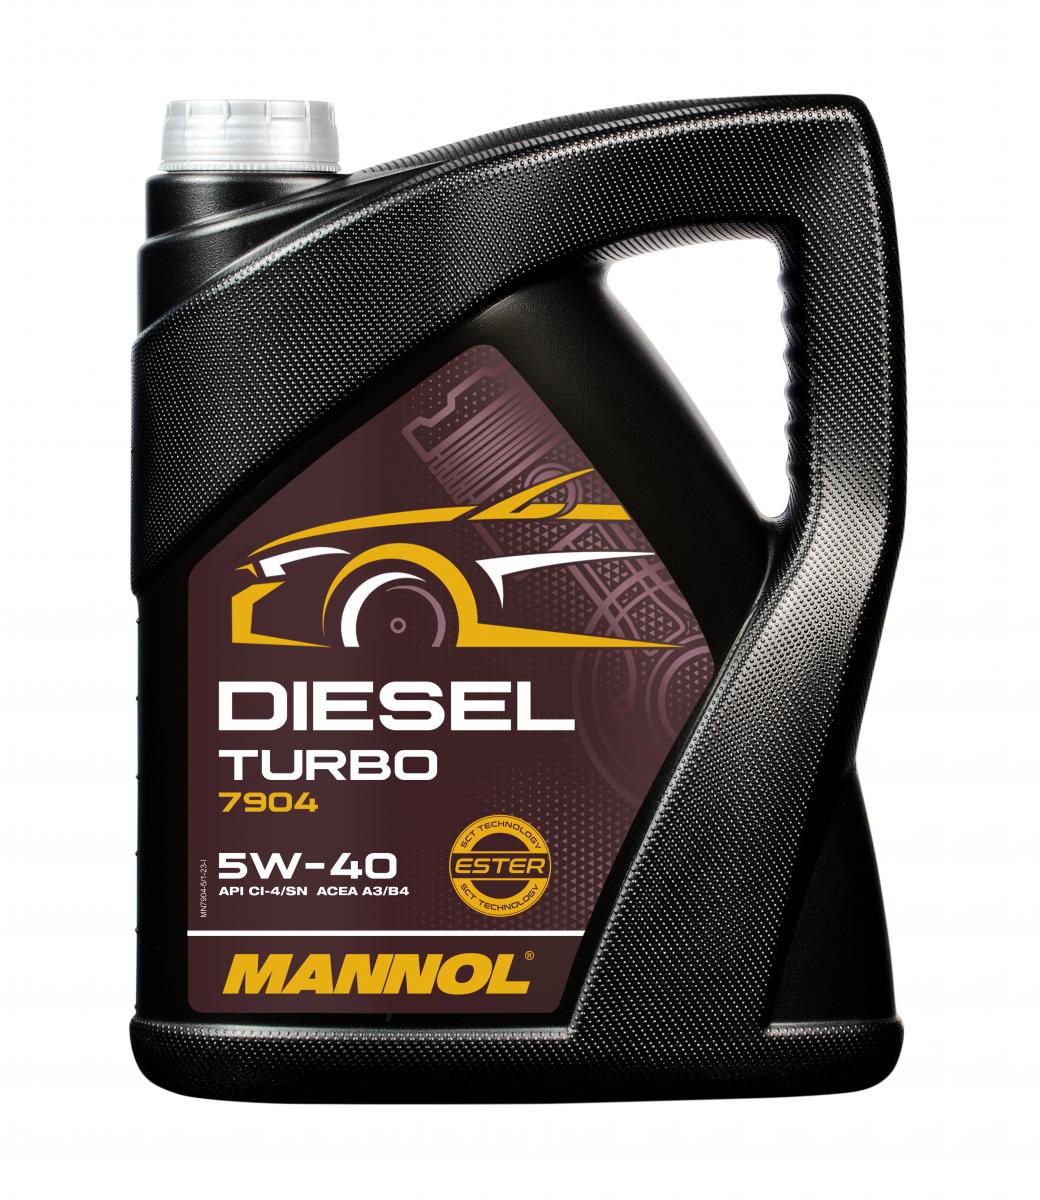 MN Diesel Turbo 5W-40